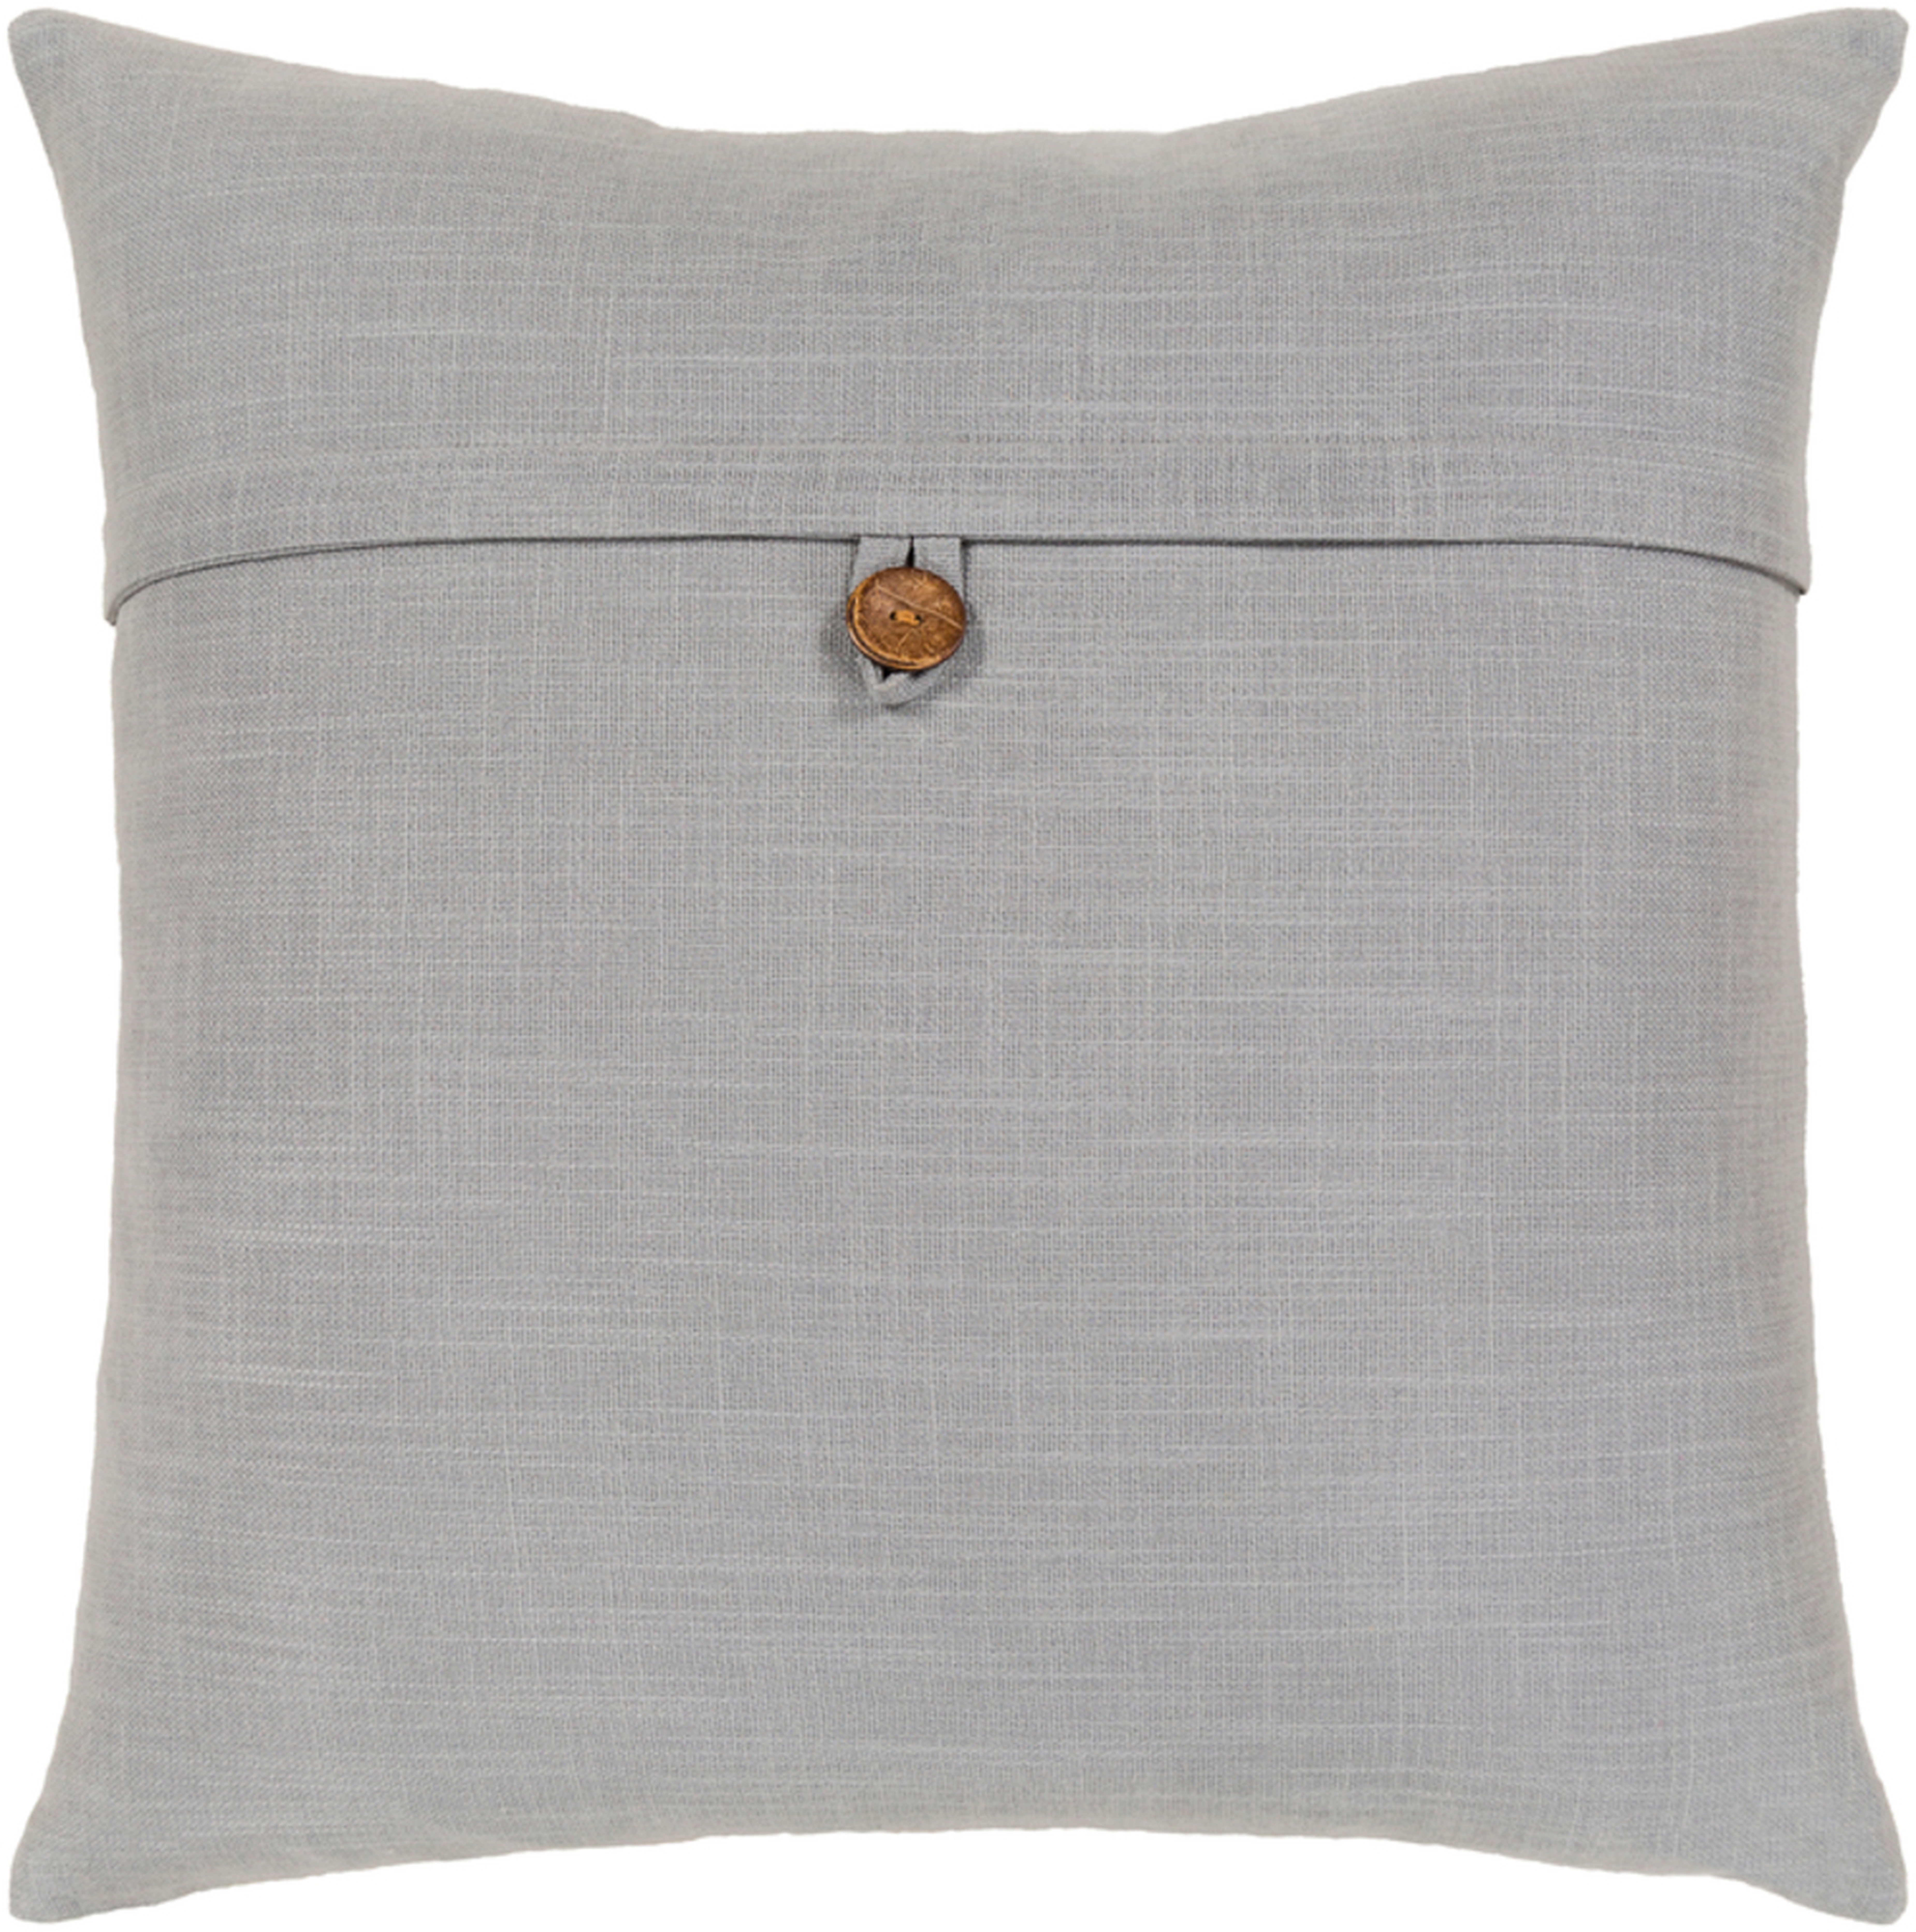 Perine Pillow Cover, 20" x 20", Light Gray - Cove Goods